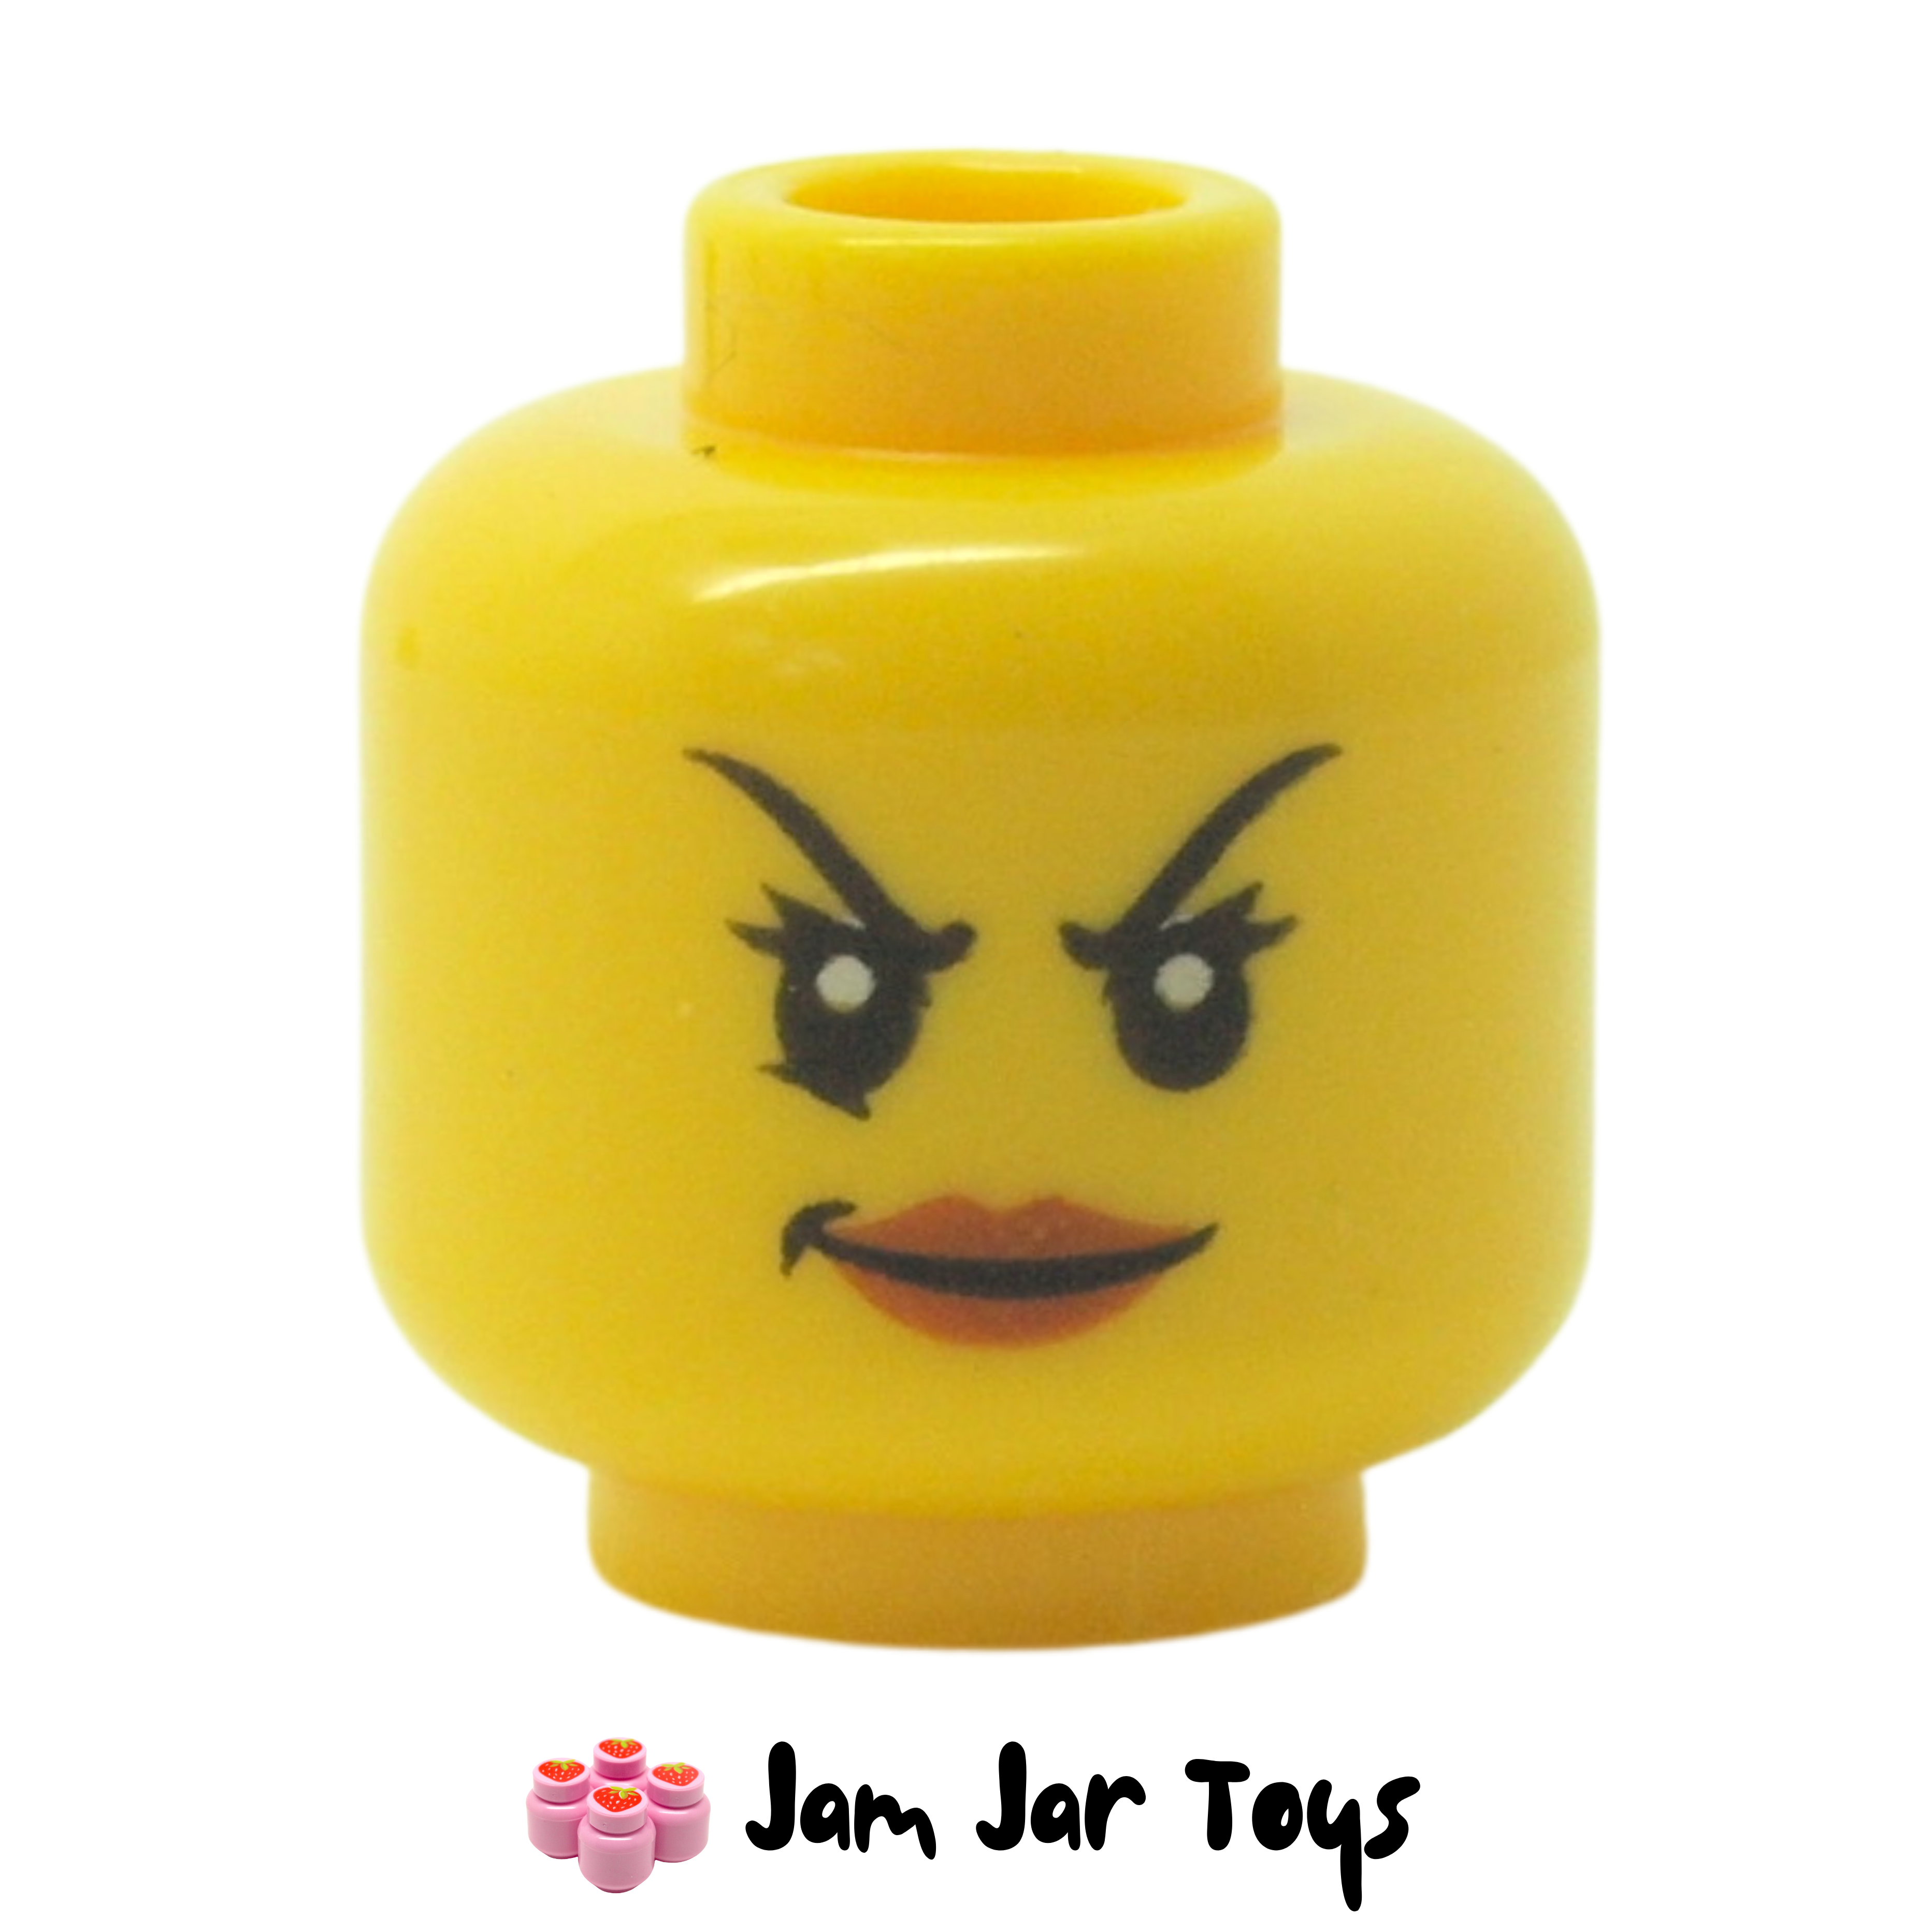 Lego New Yellow Minifigure Head Female with Black Eyebrows One Eyebrow Raised 